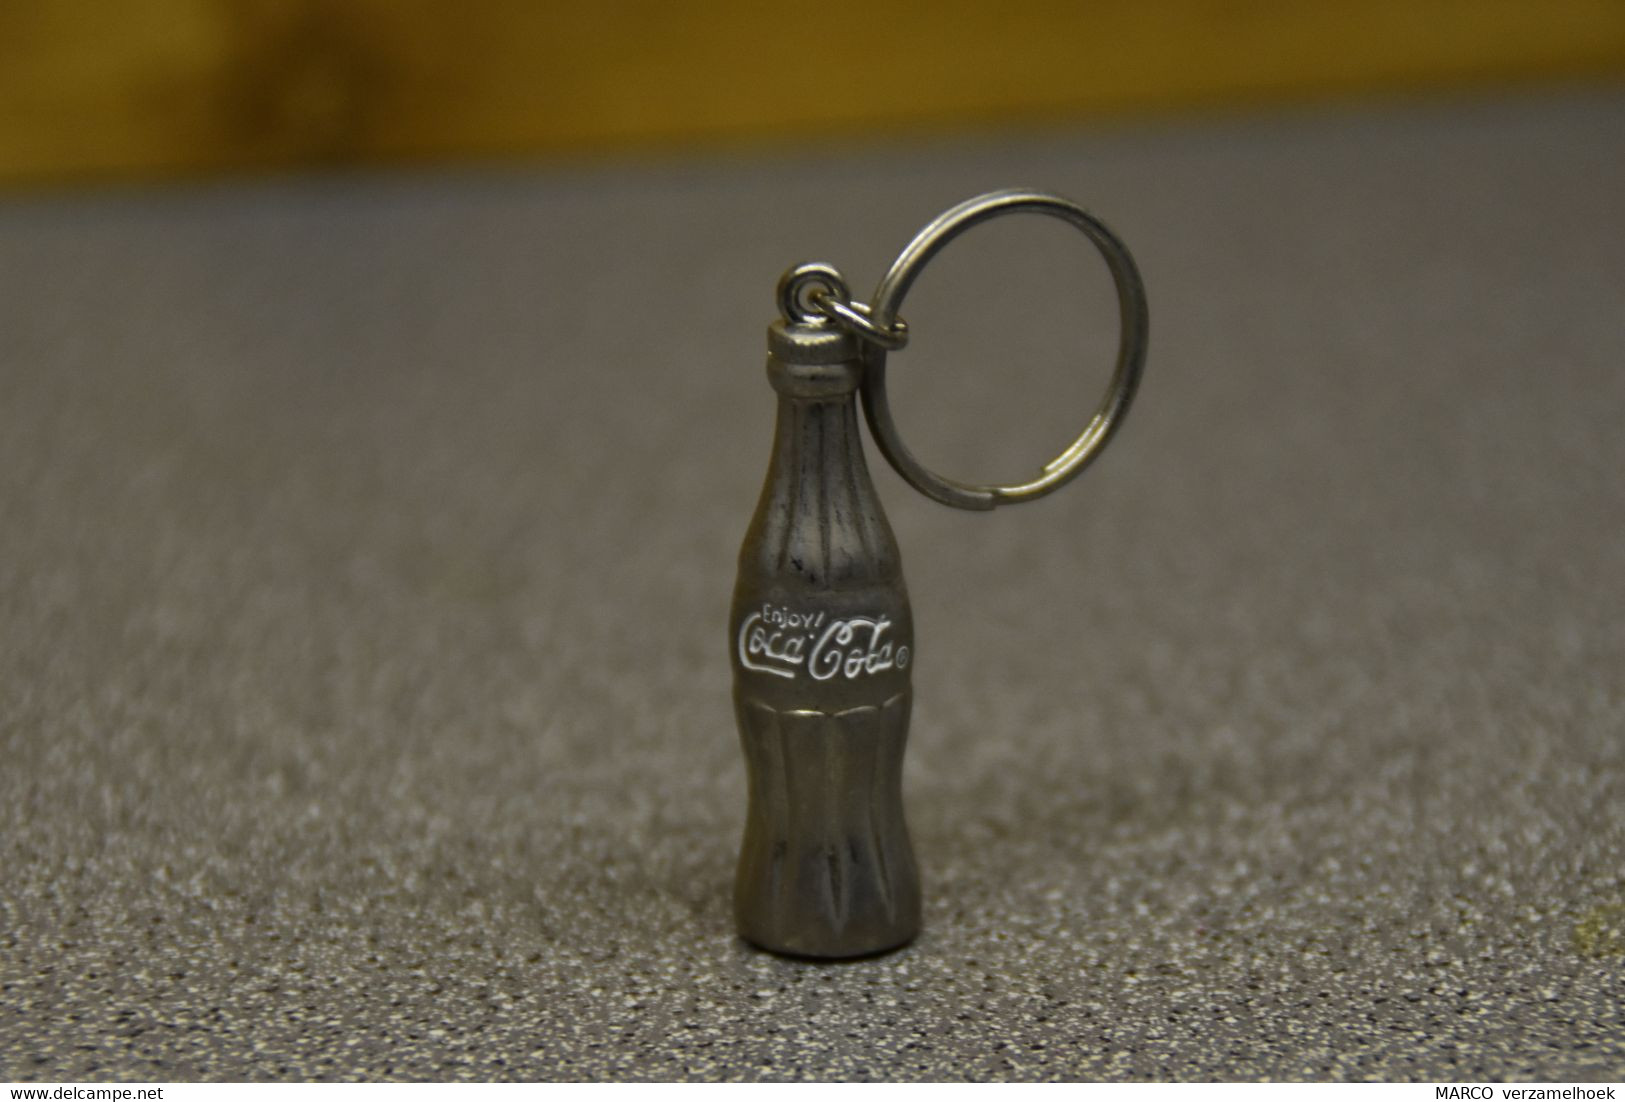 Coca-cola Company Porte Clé-sleutelhanger-key Chain - Schlüsselanhänger